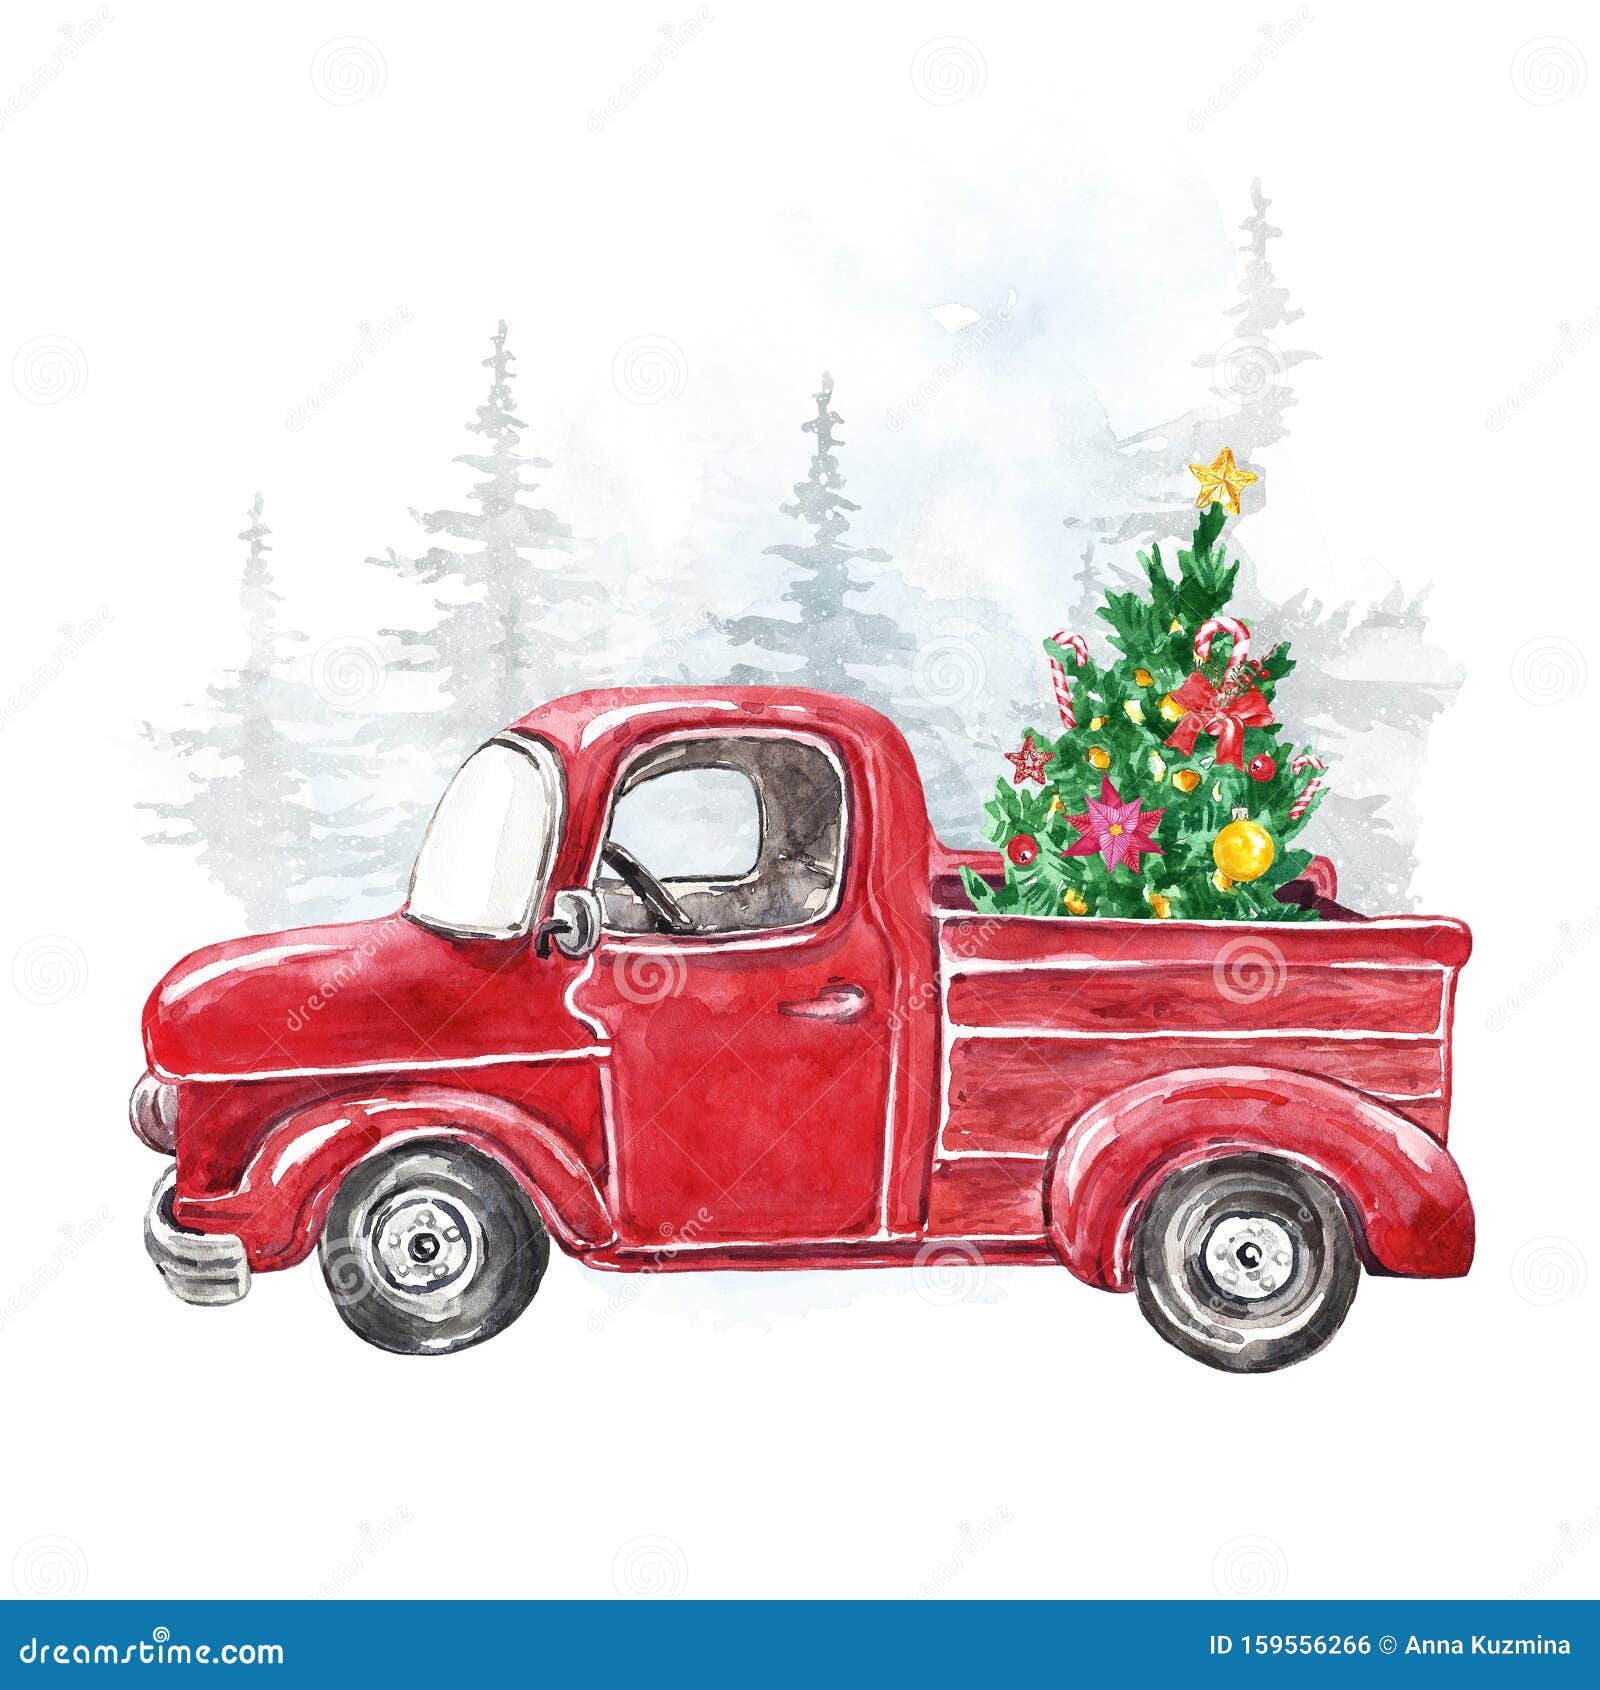 44+ Christmas Pick Up Truck Desktop Wallpaper HD download